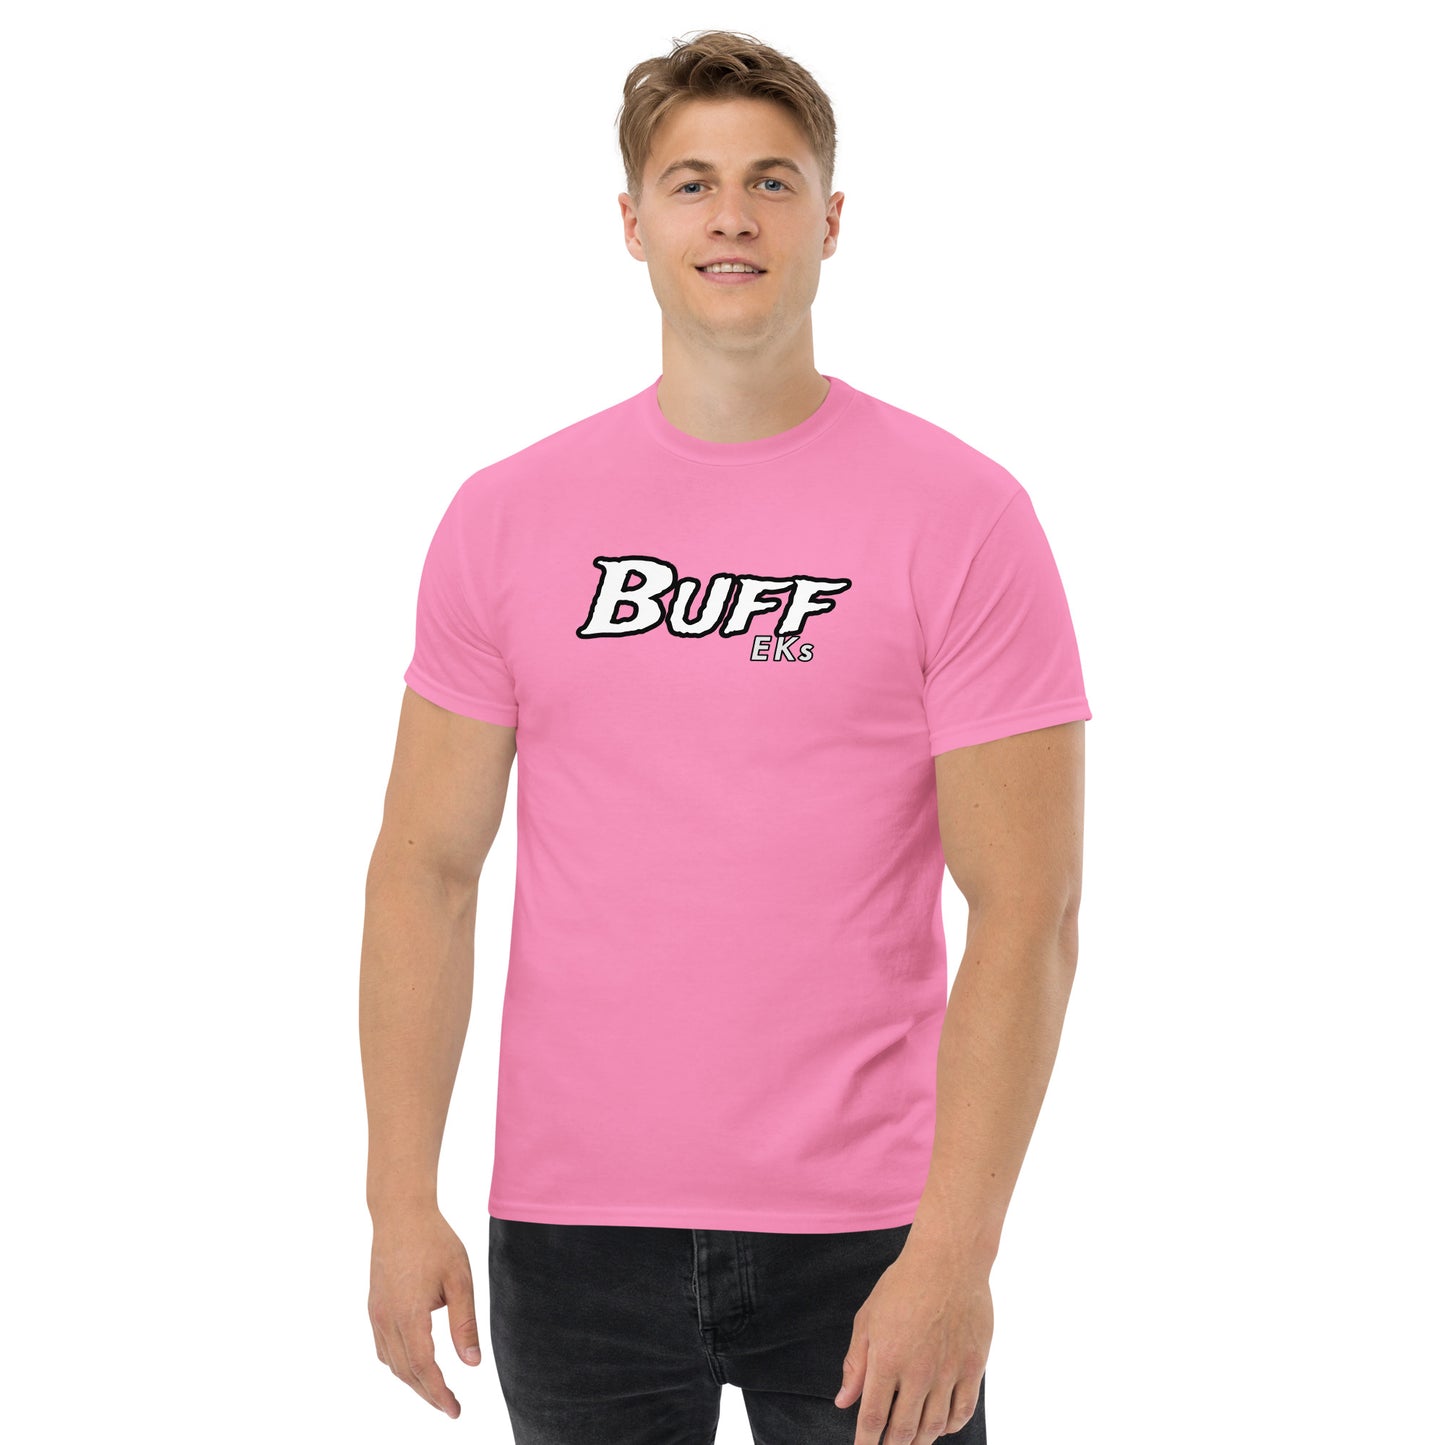 Buff EKs Men's Classic T-Shirt